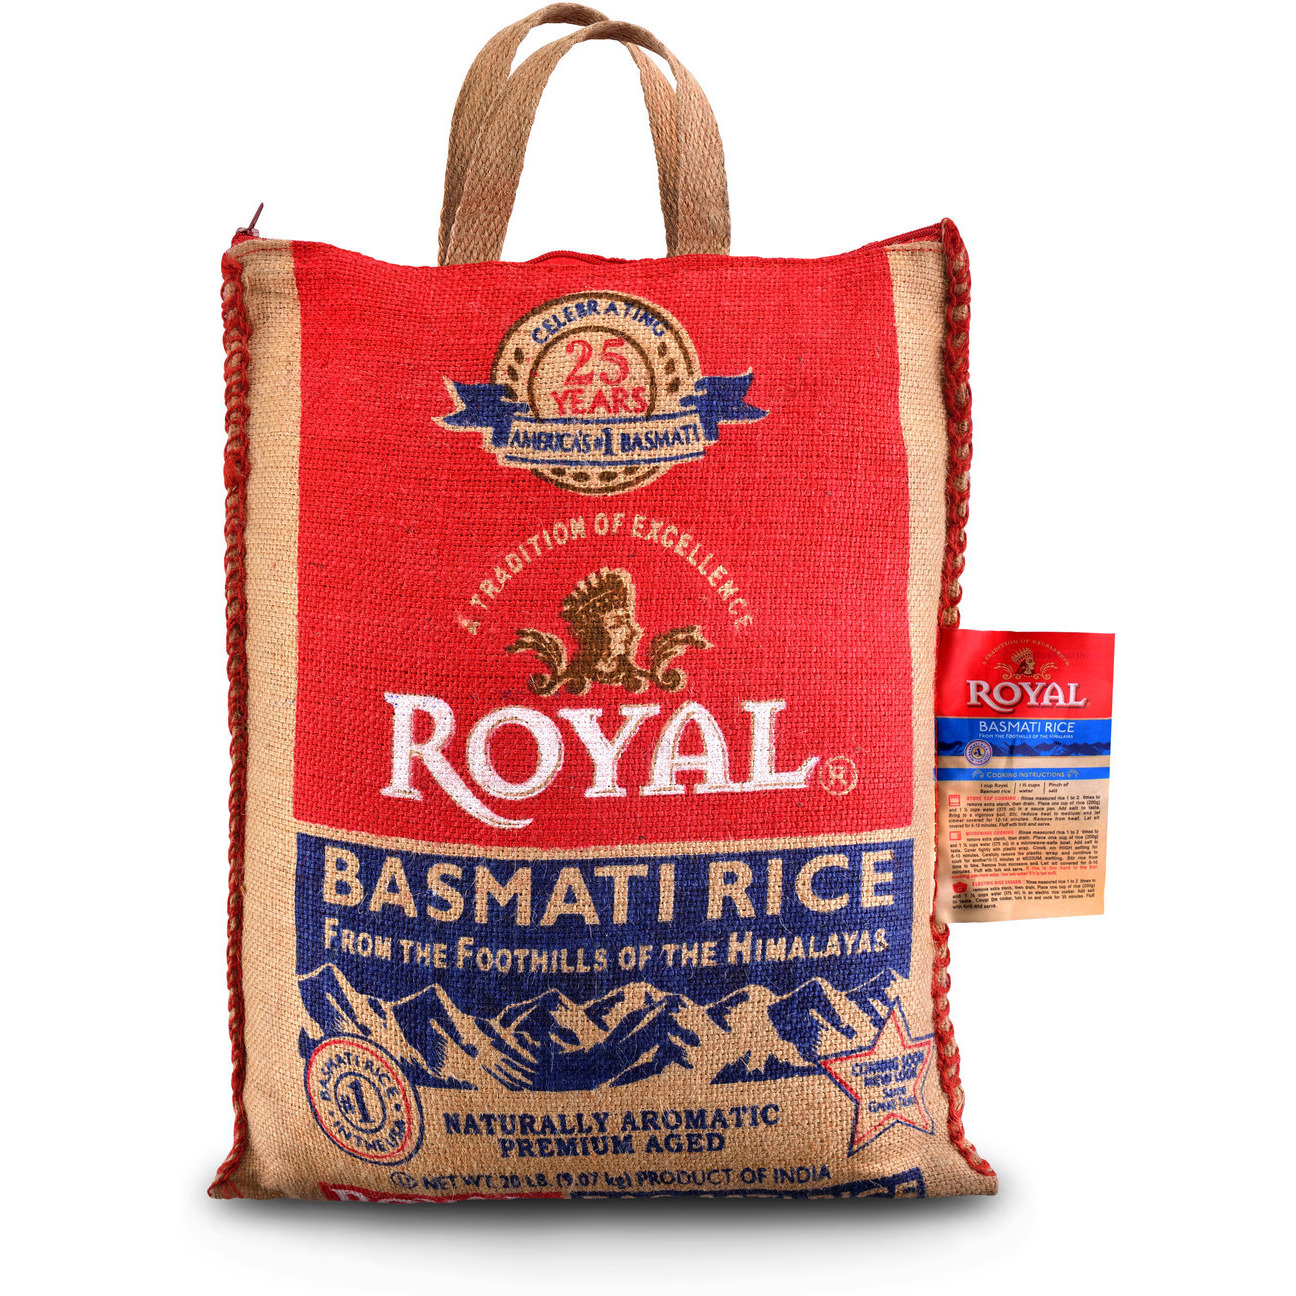 Case of 1 - Royal Bastmati Rice - 20 Lb (9.08 Kg)